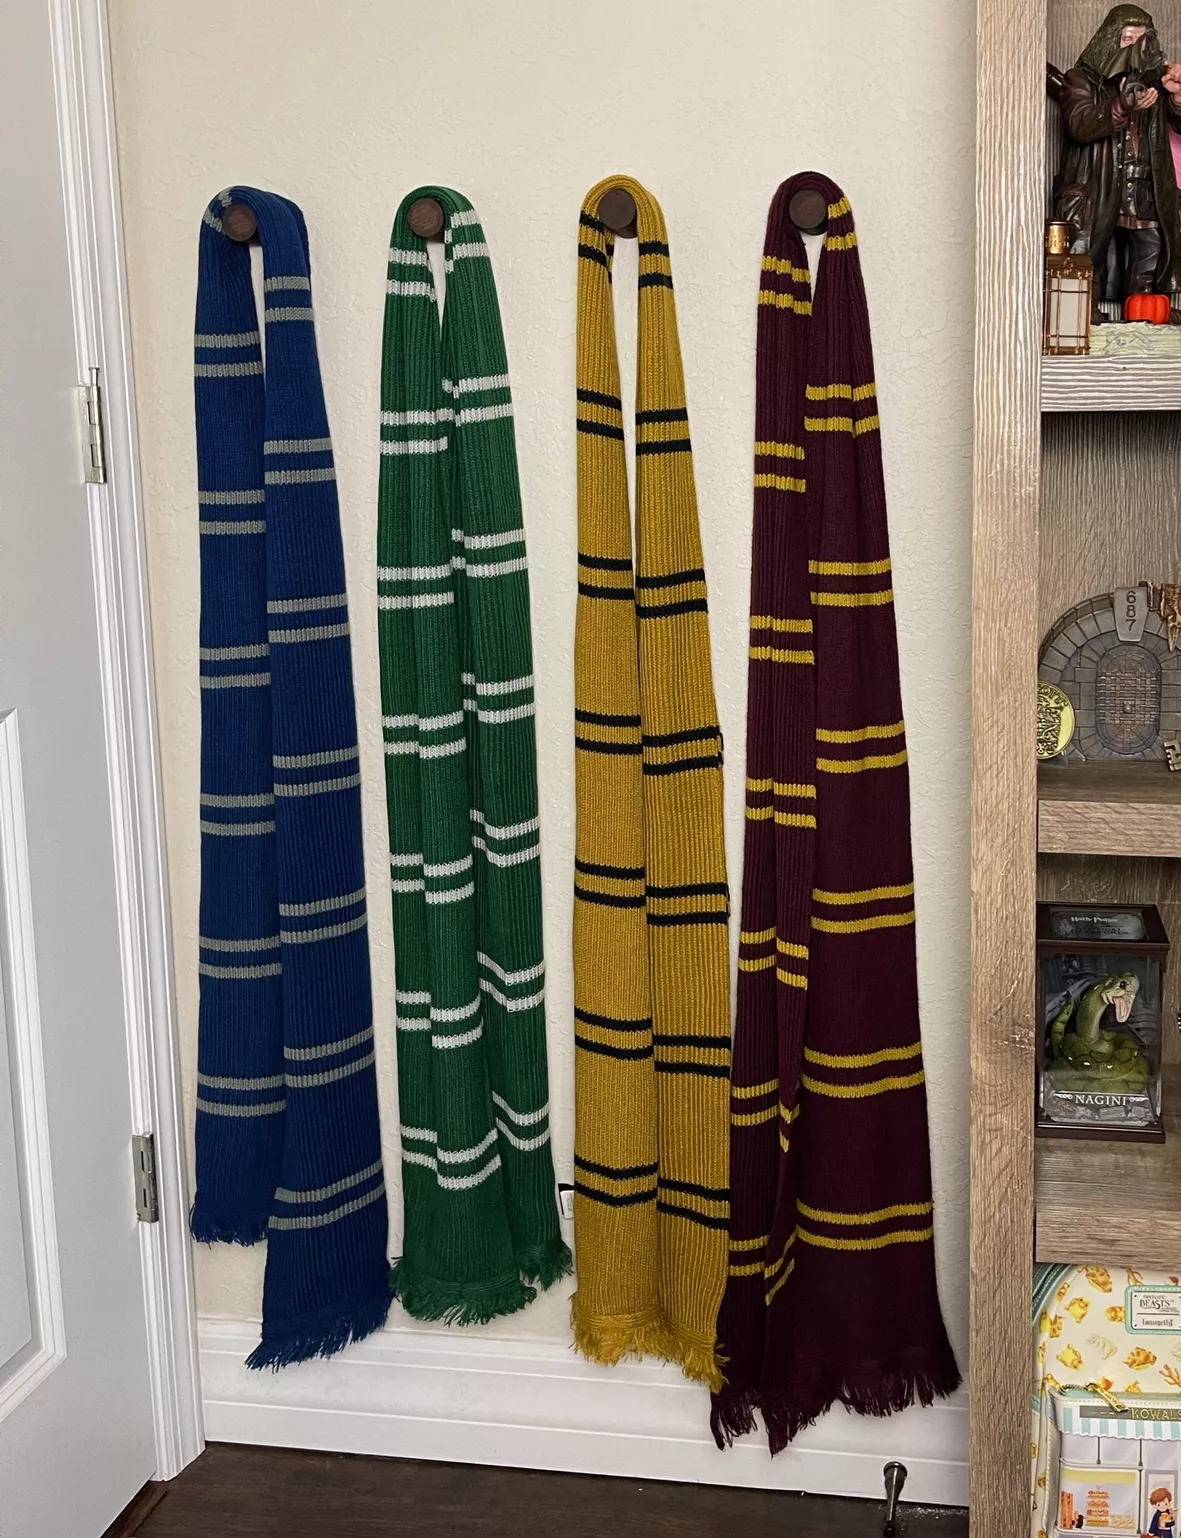 Harry Potter Village Weasleys … curated on LTK